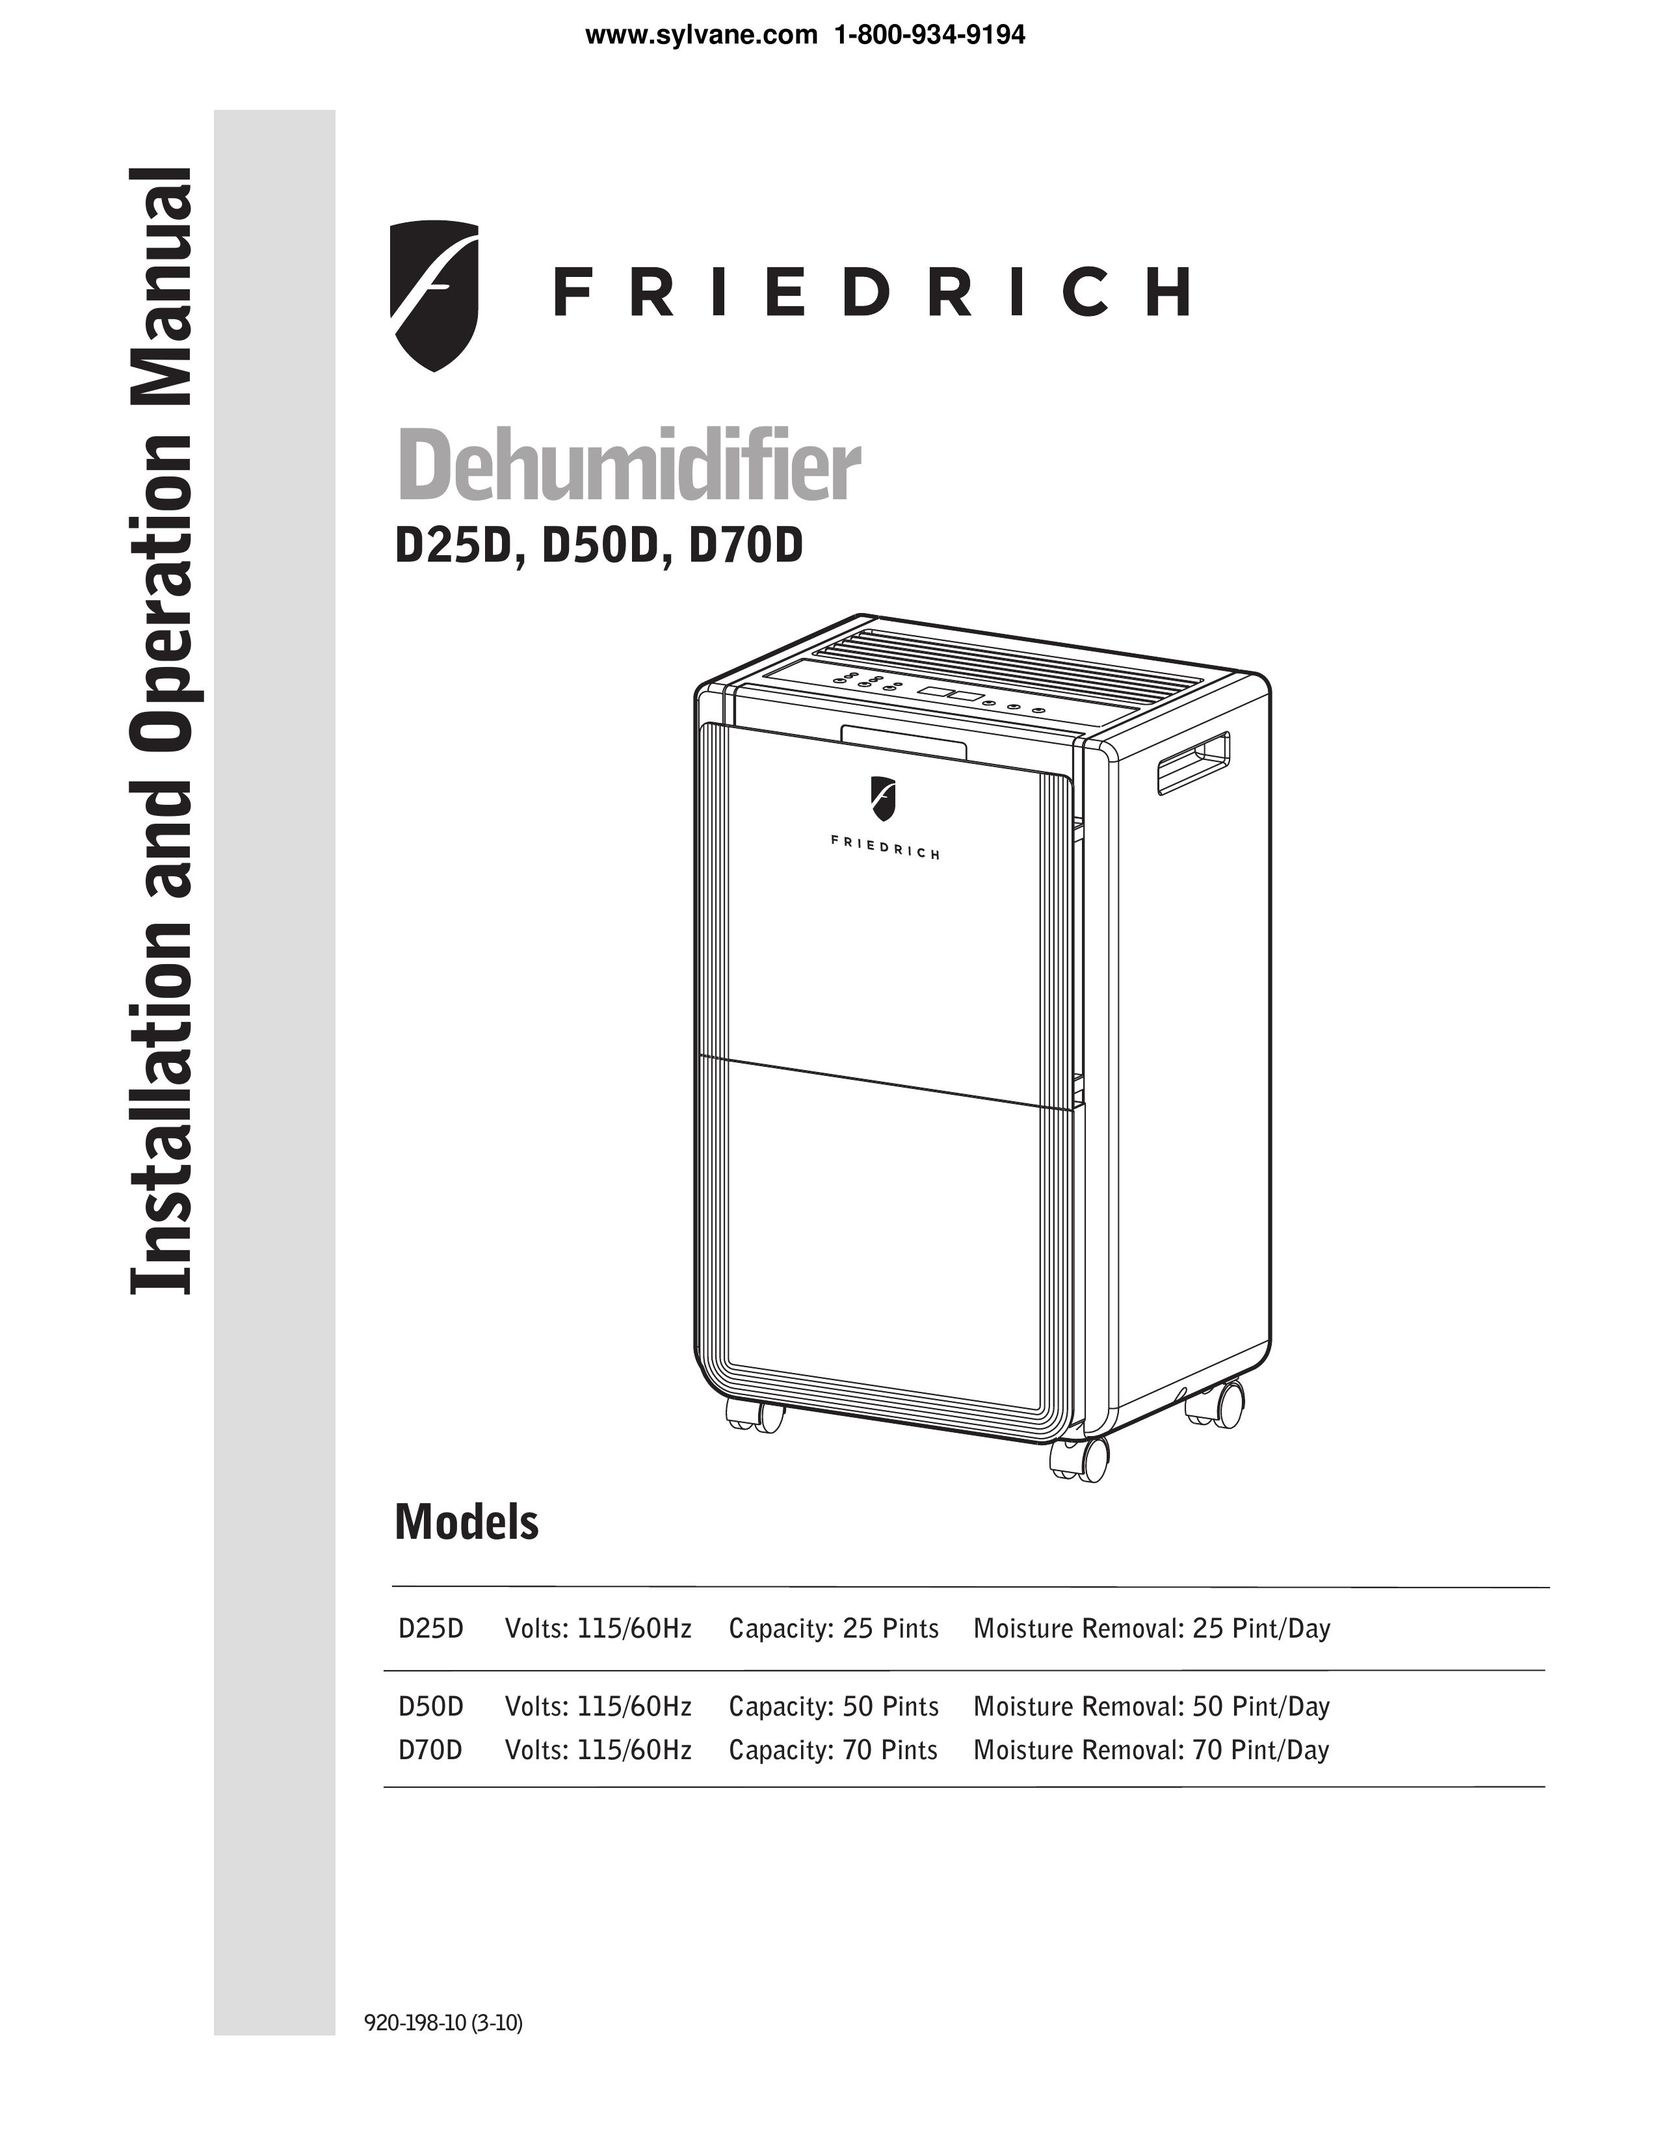 Frigidaire D70D Dehumidifier User Manual